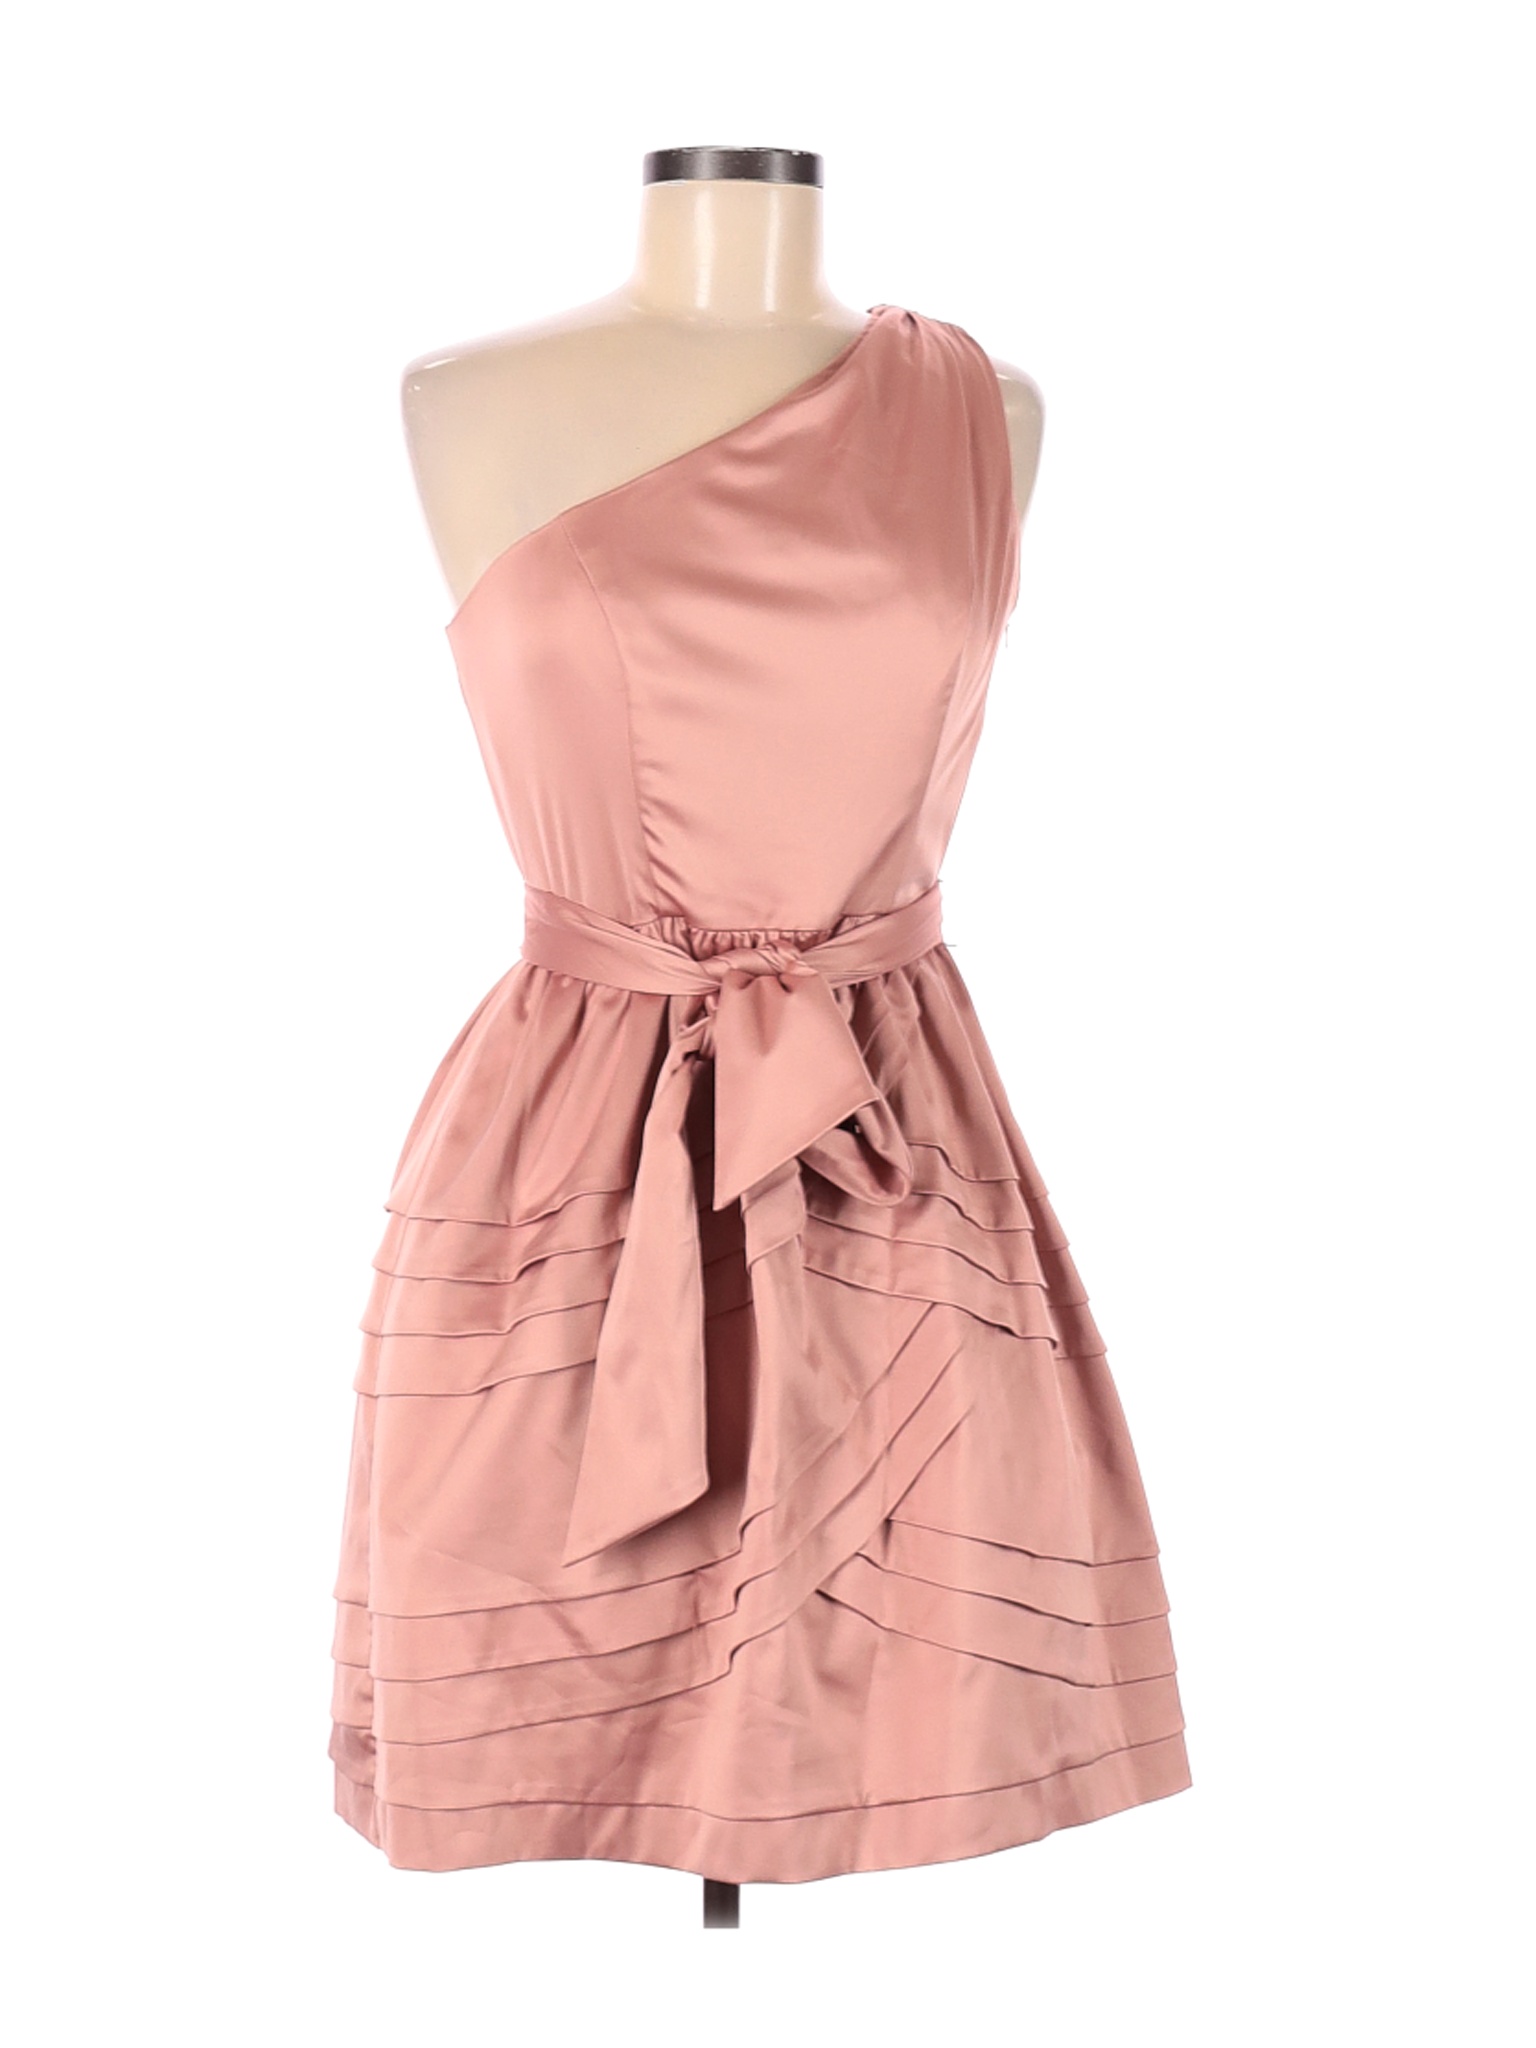 Jessica Simpson Women Pink Cocktail Dress 6 | eBay